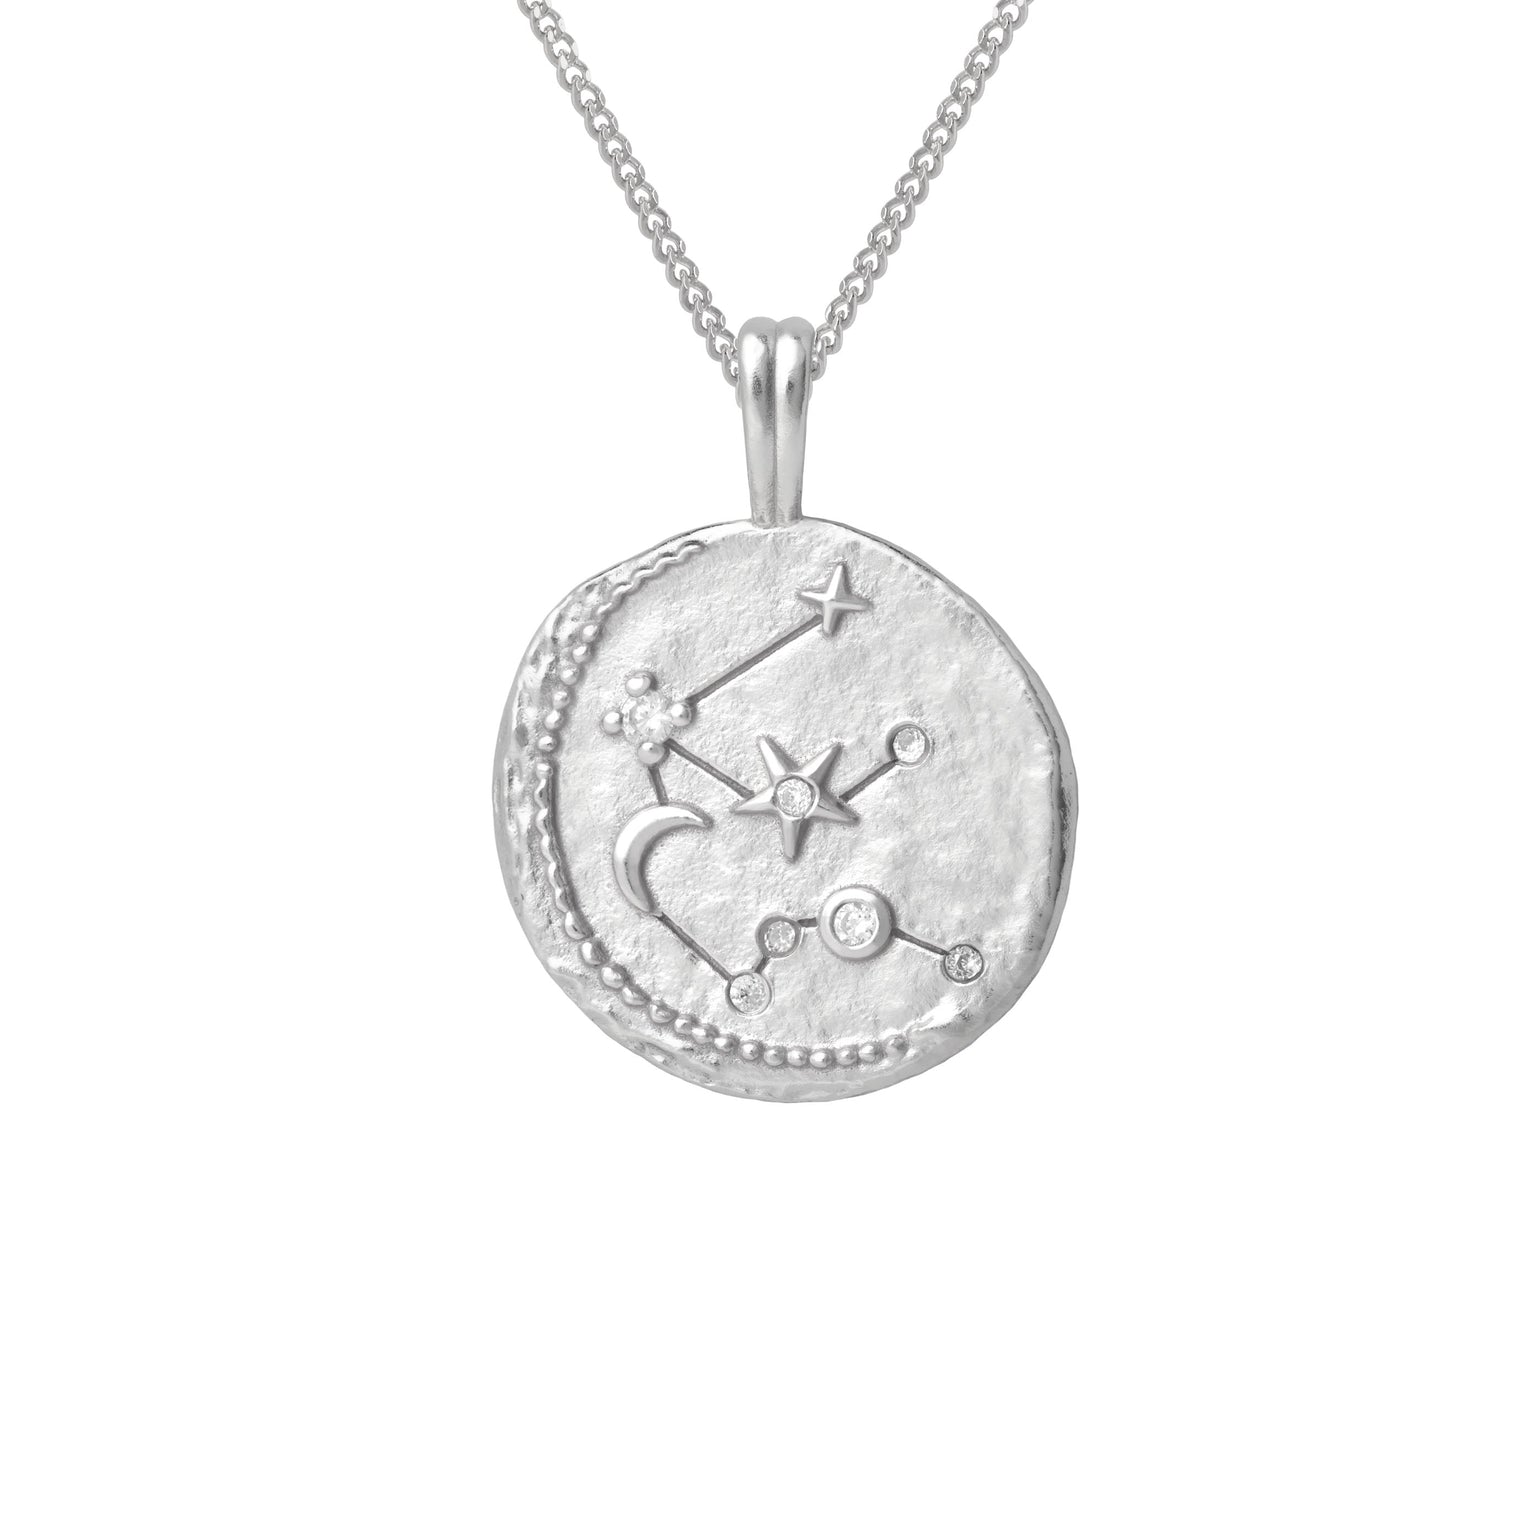 Aquarius Zodiac Pendant Necklace in Silver